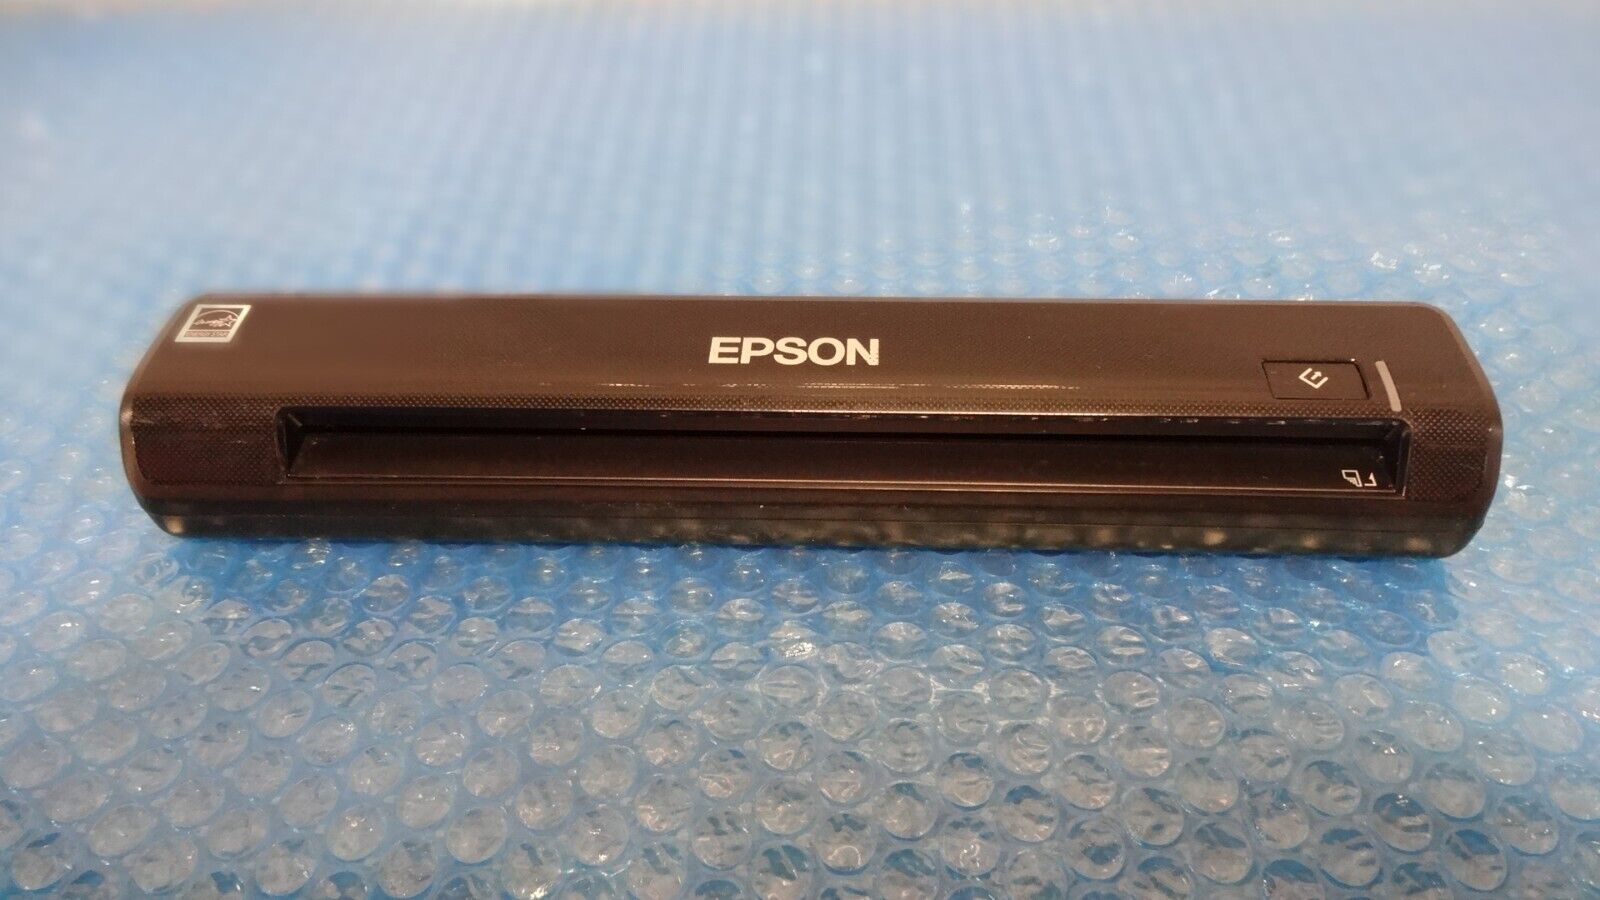 Epson DS-30 J291A WorkForce Portable USB Color Document Scanner